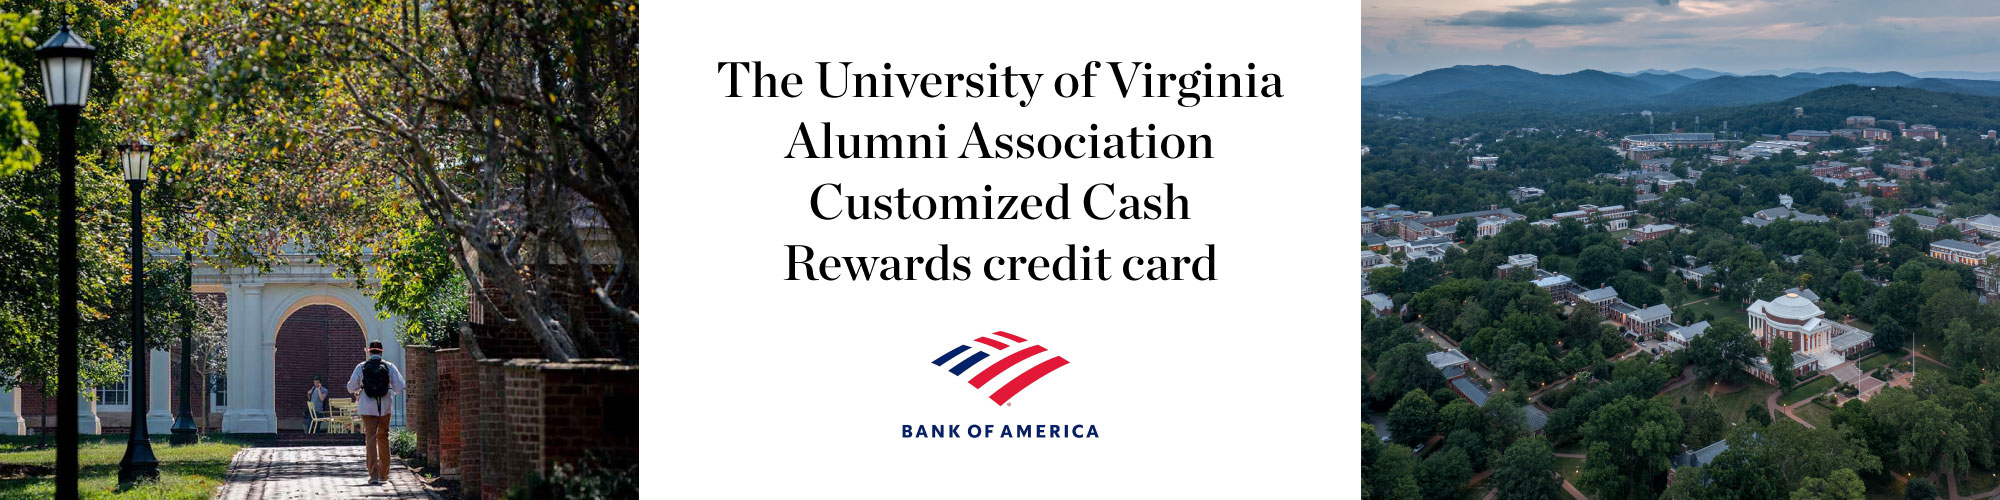 The University of Virginia Alumni Association Customized Cash Rewards credit card